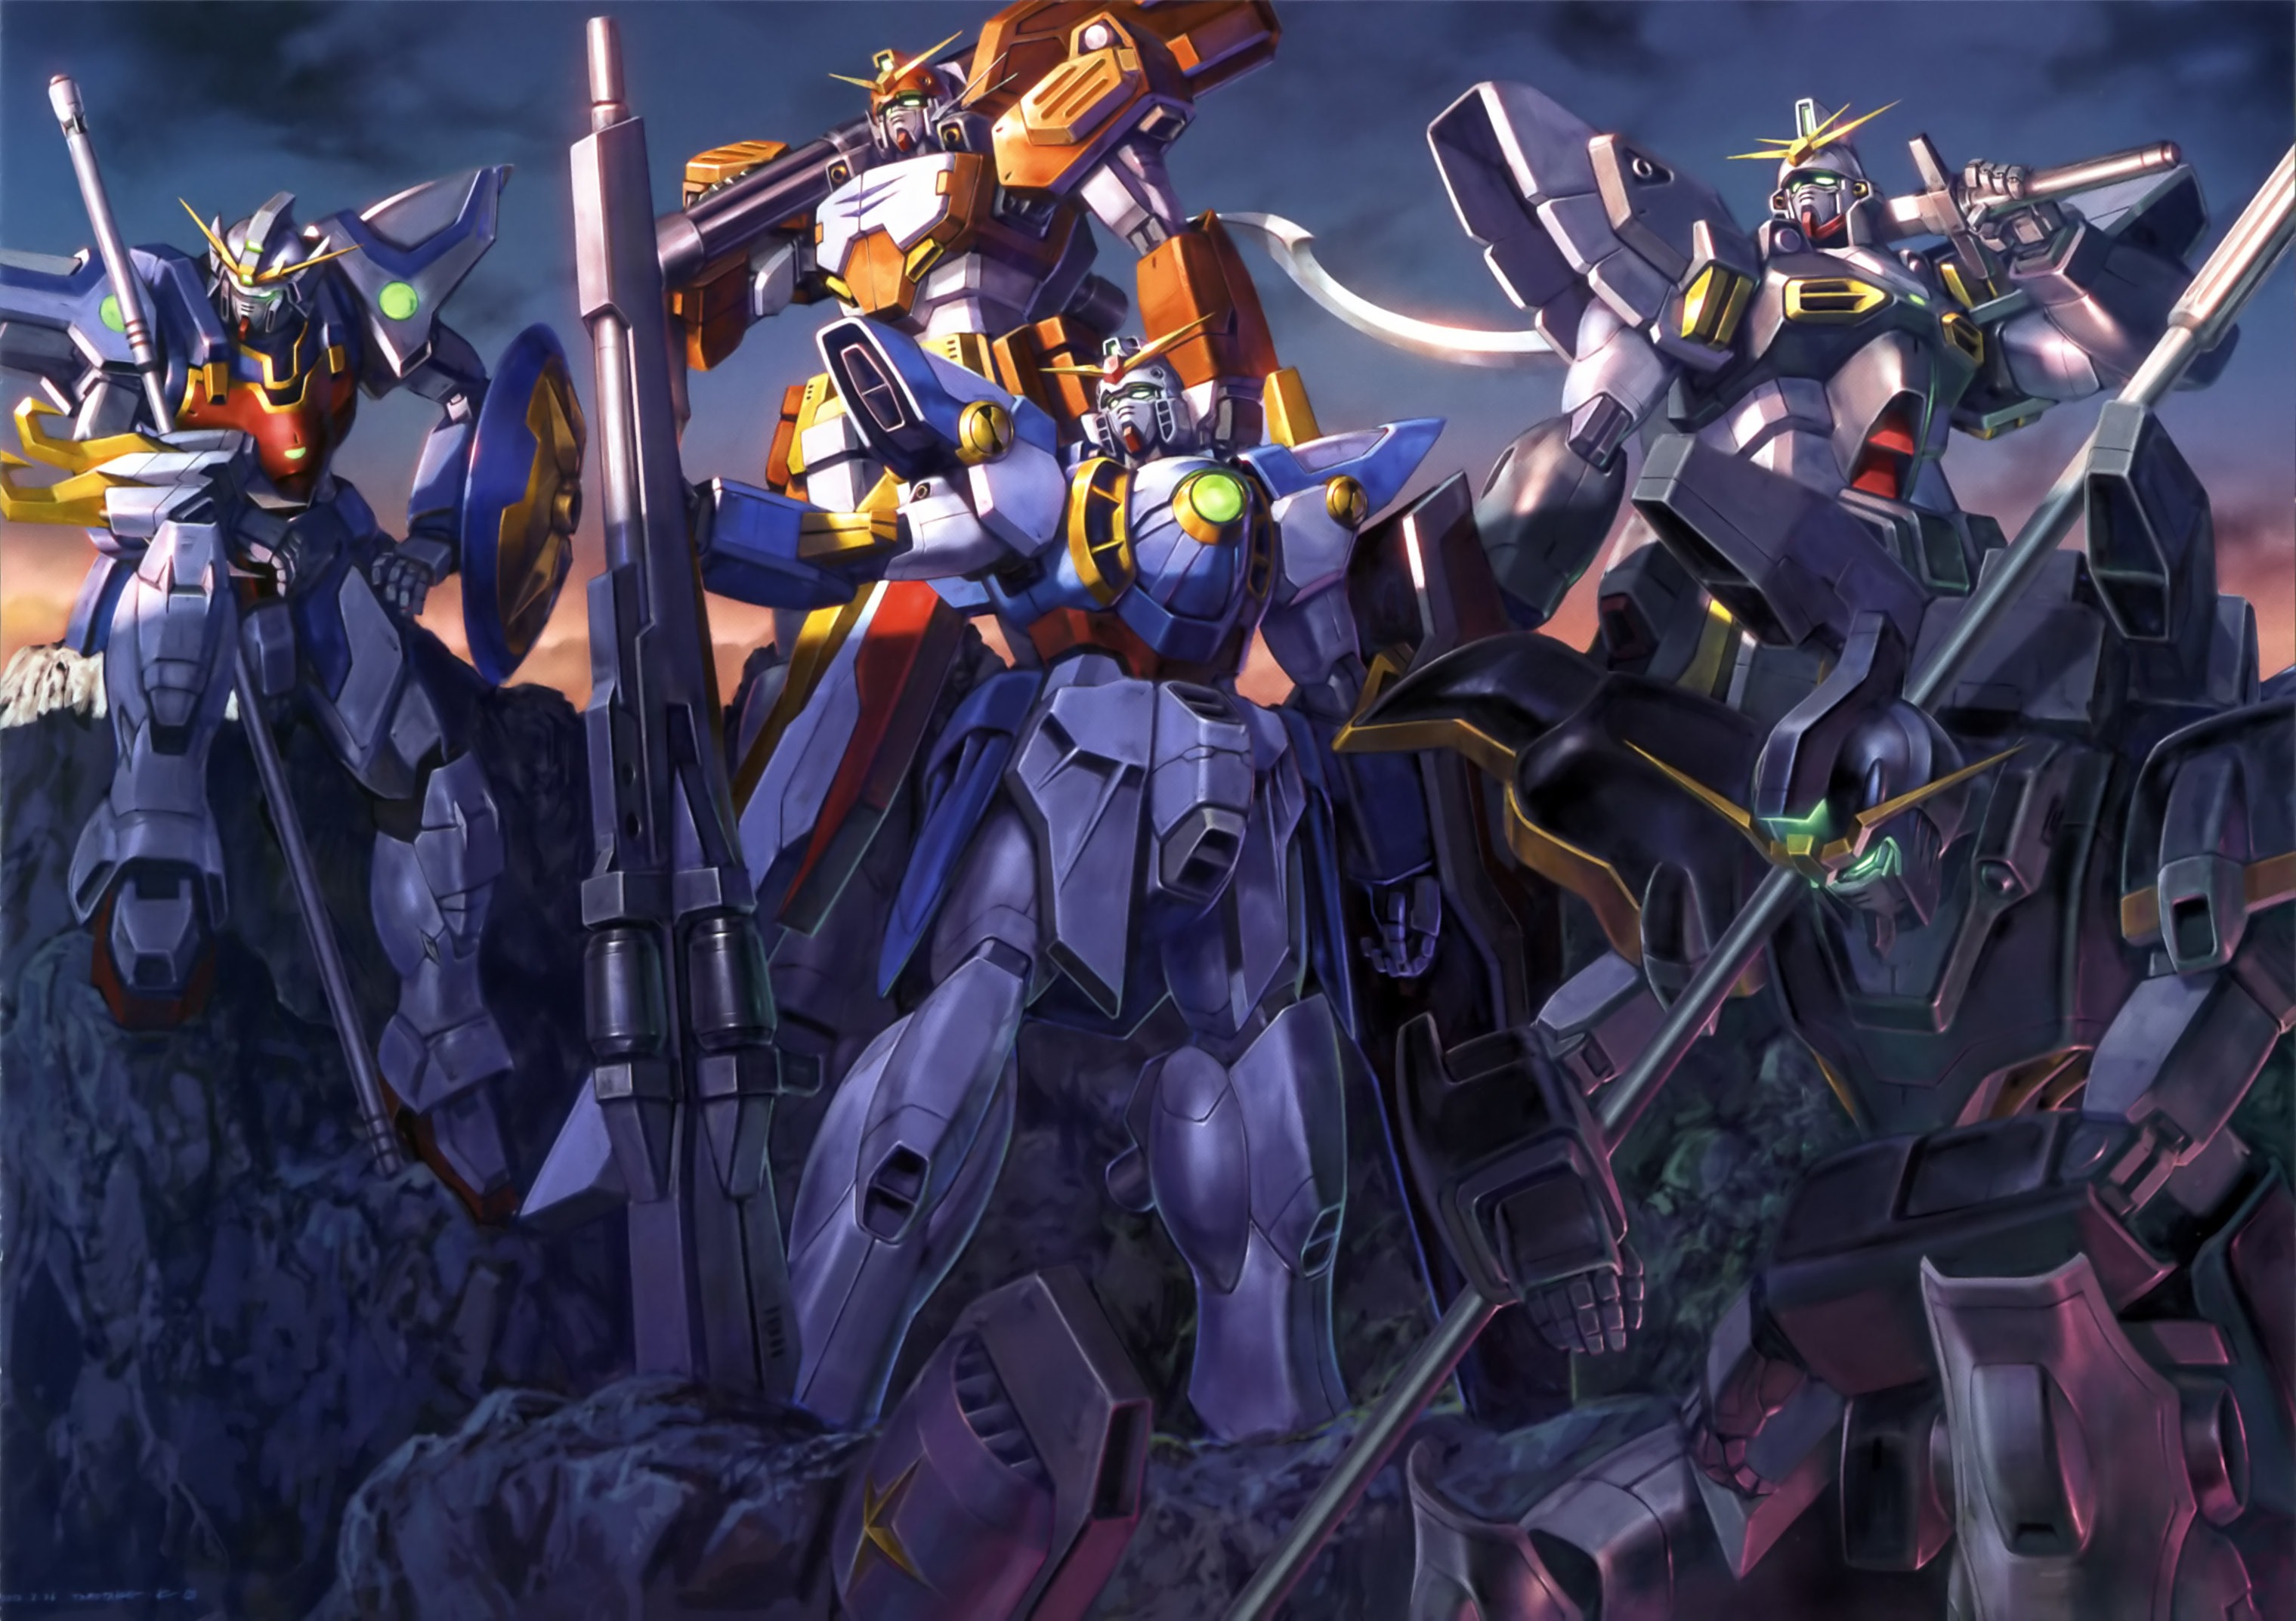 Anime Mobile Suit Gundam 3039x2145